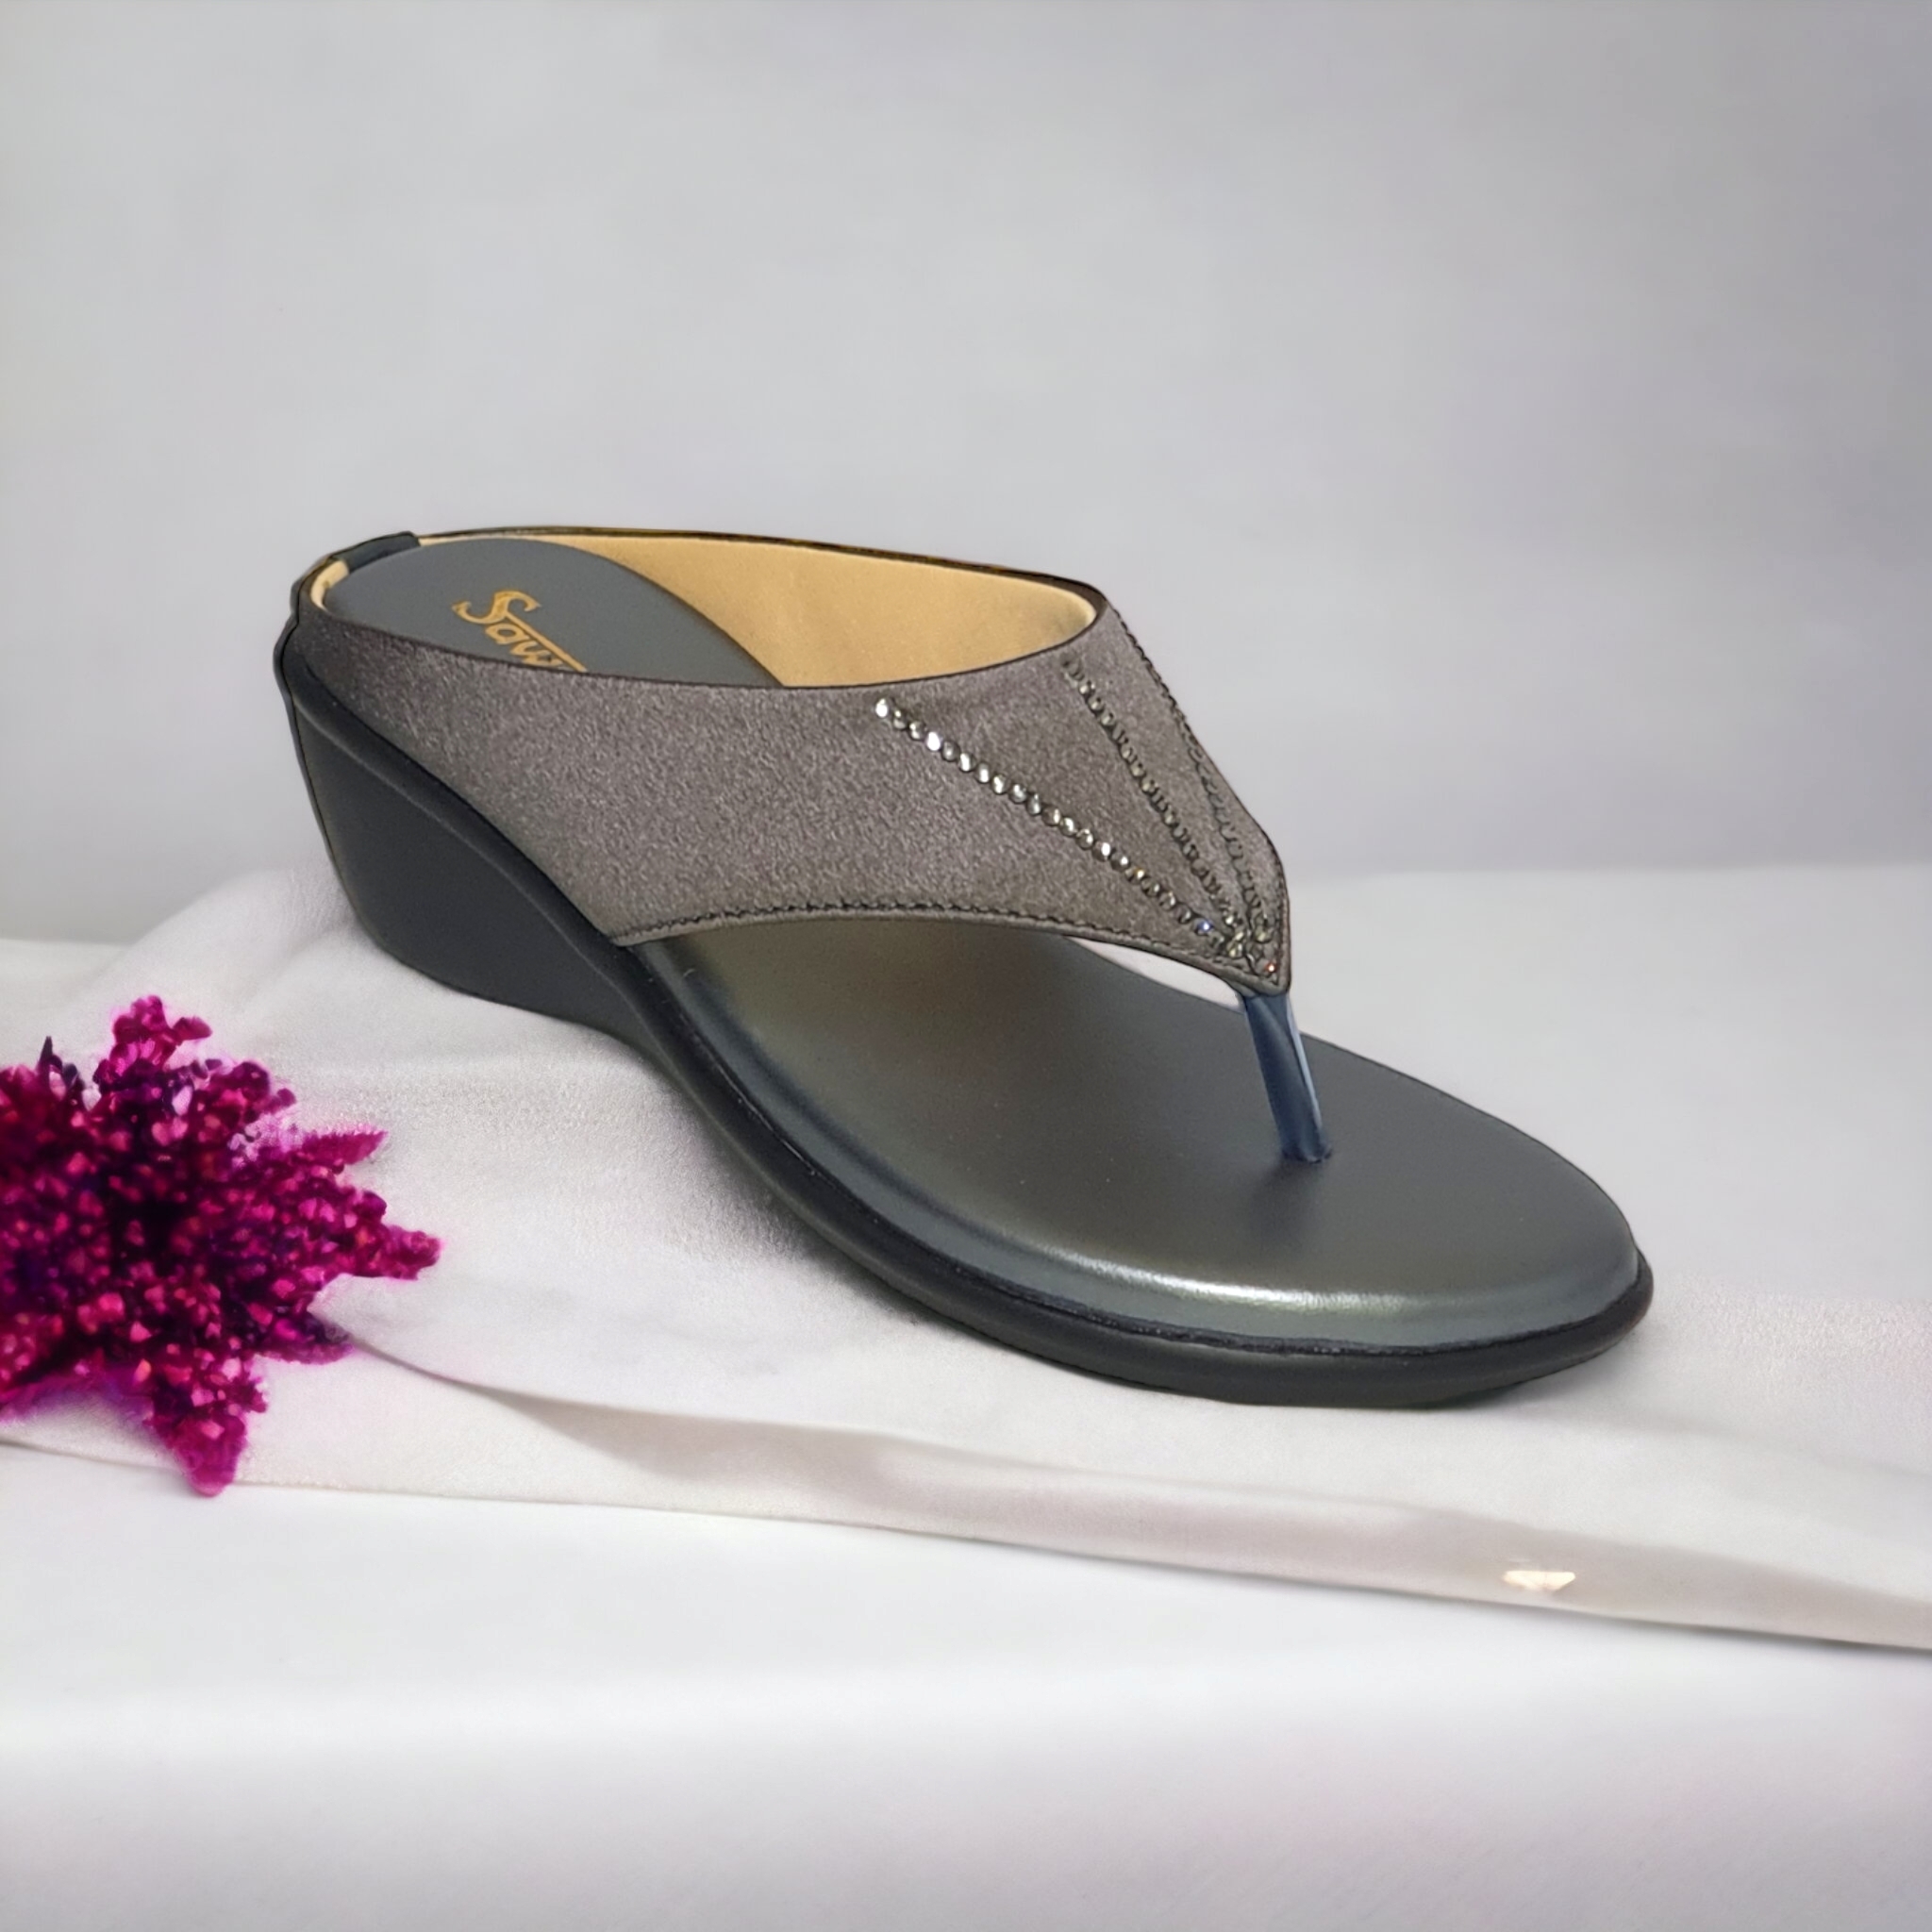 Sawadi women flat sandals and chappals